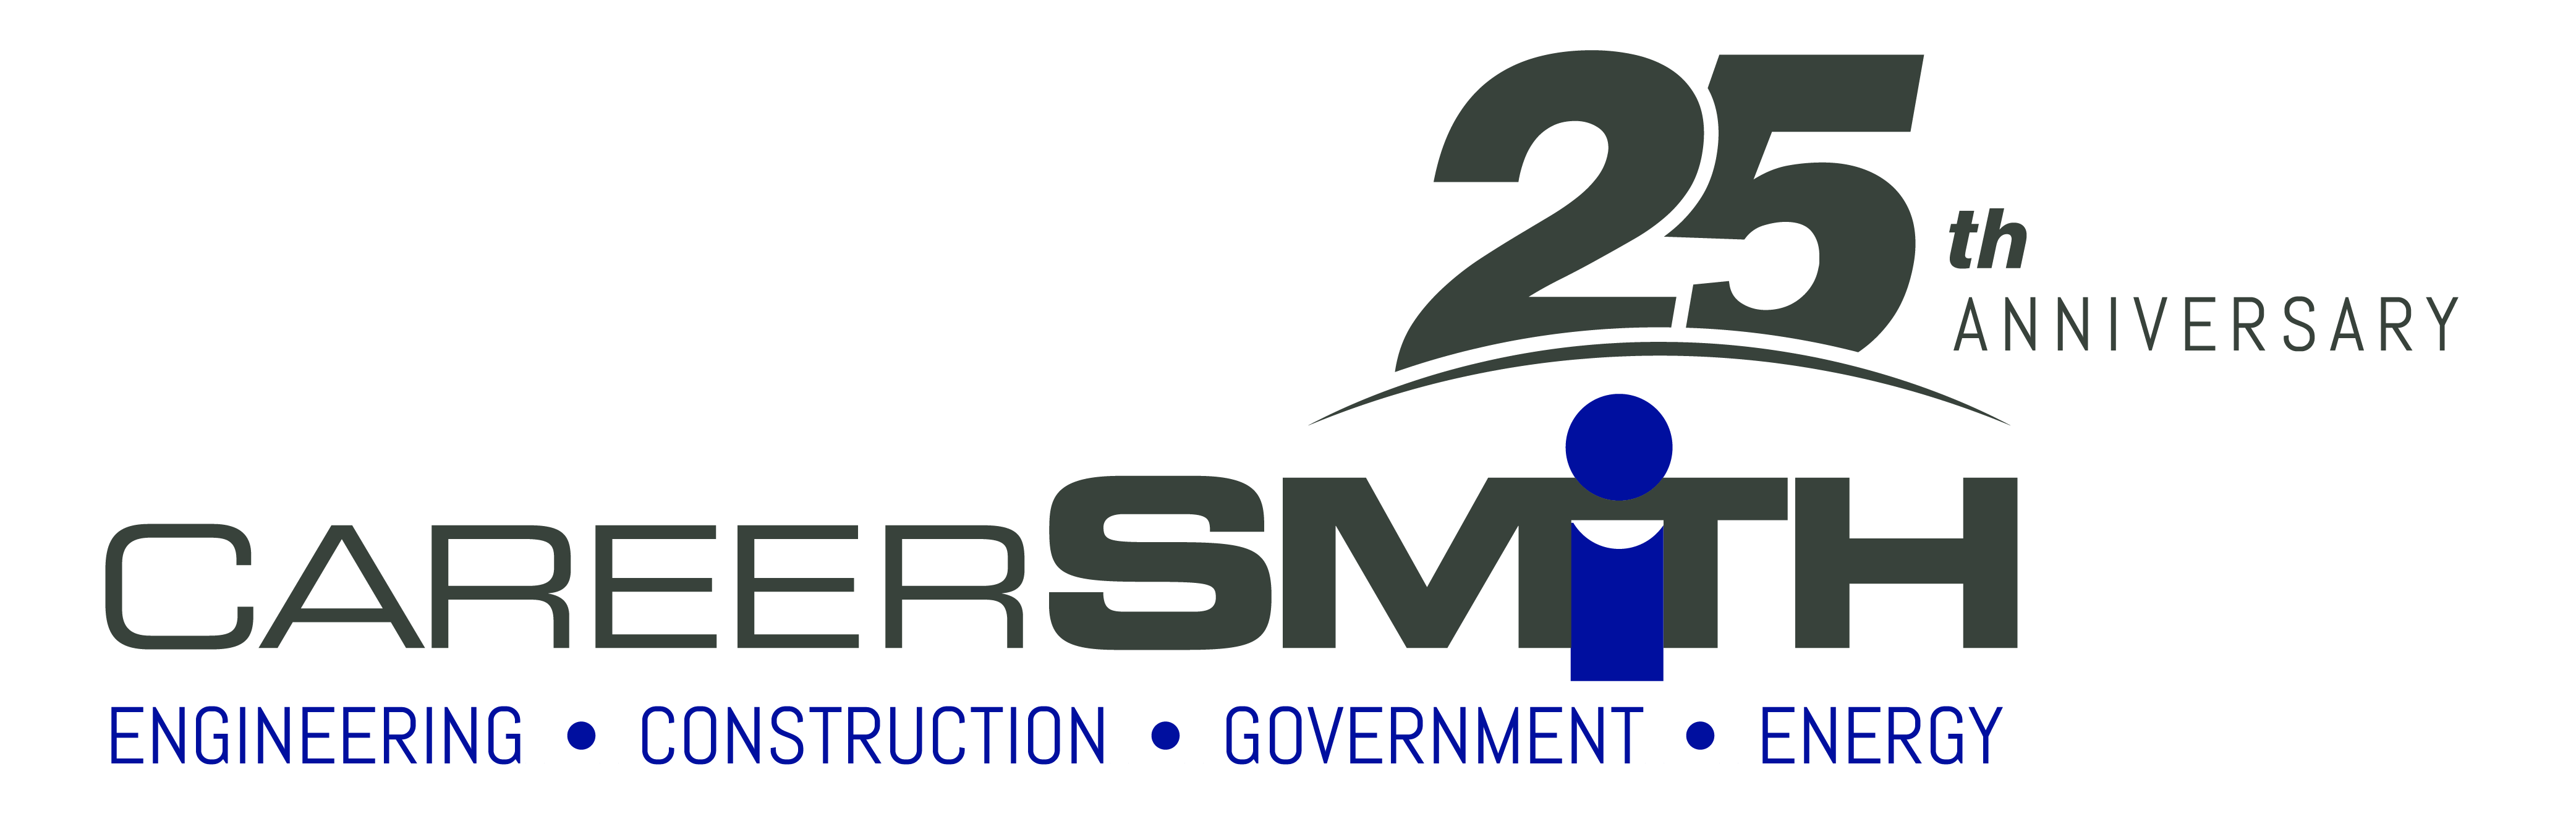 CS-25th Logo-01